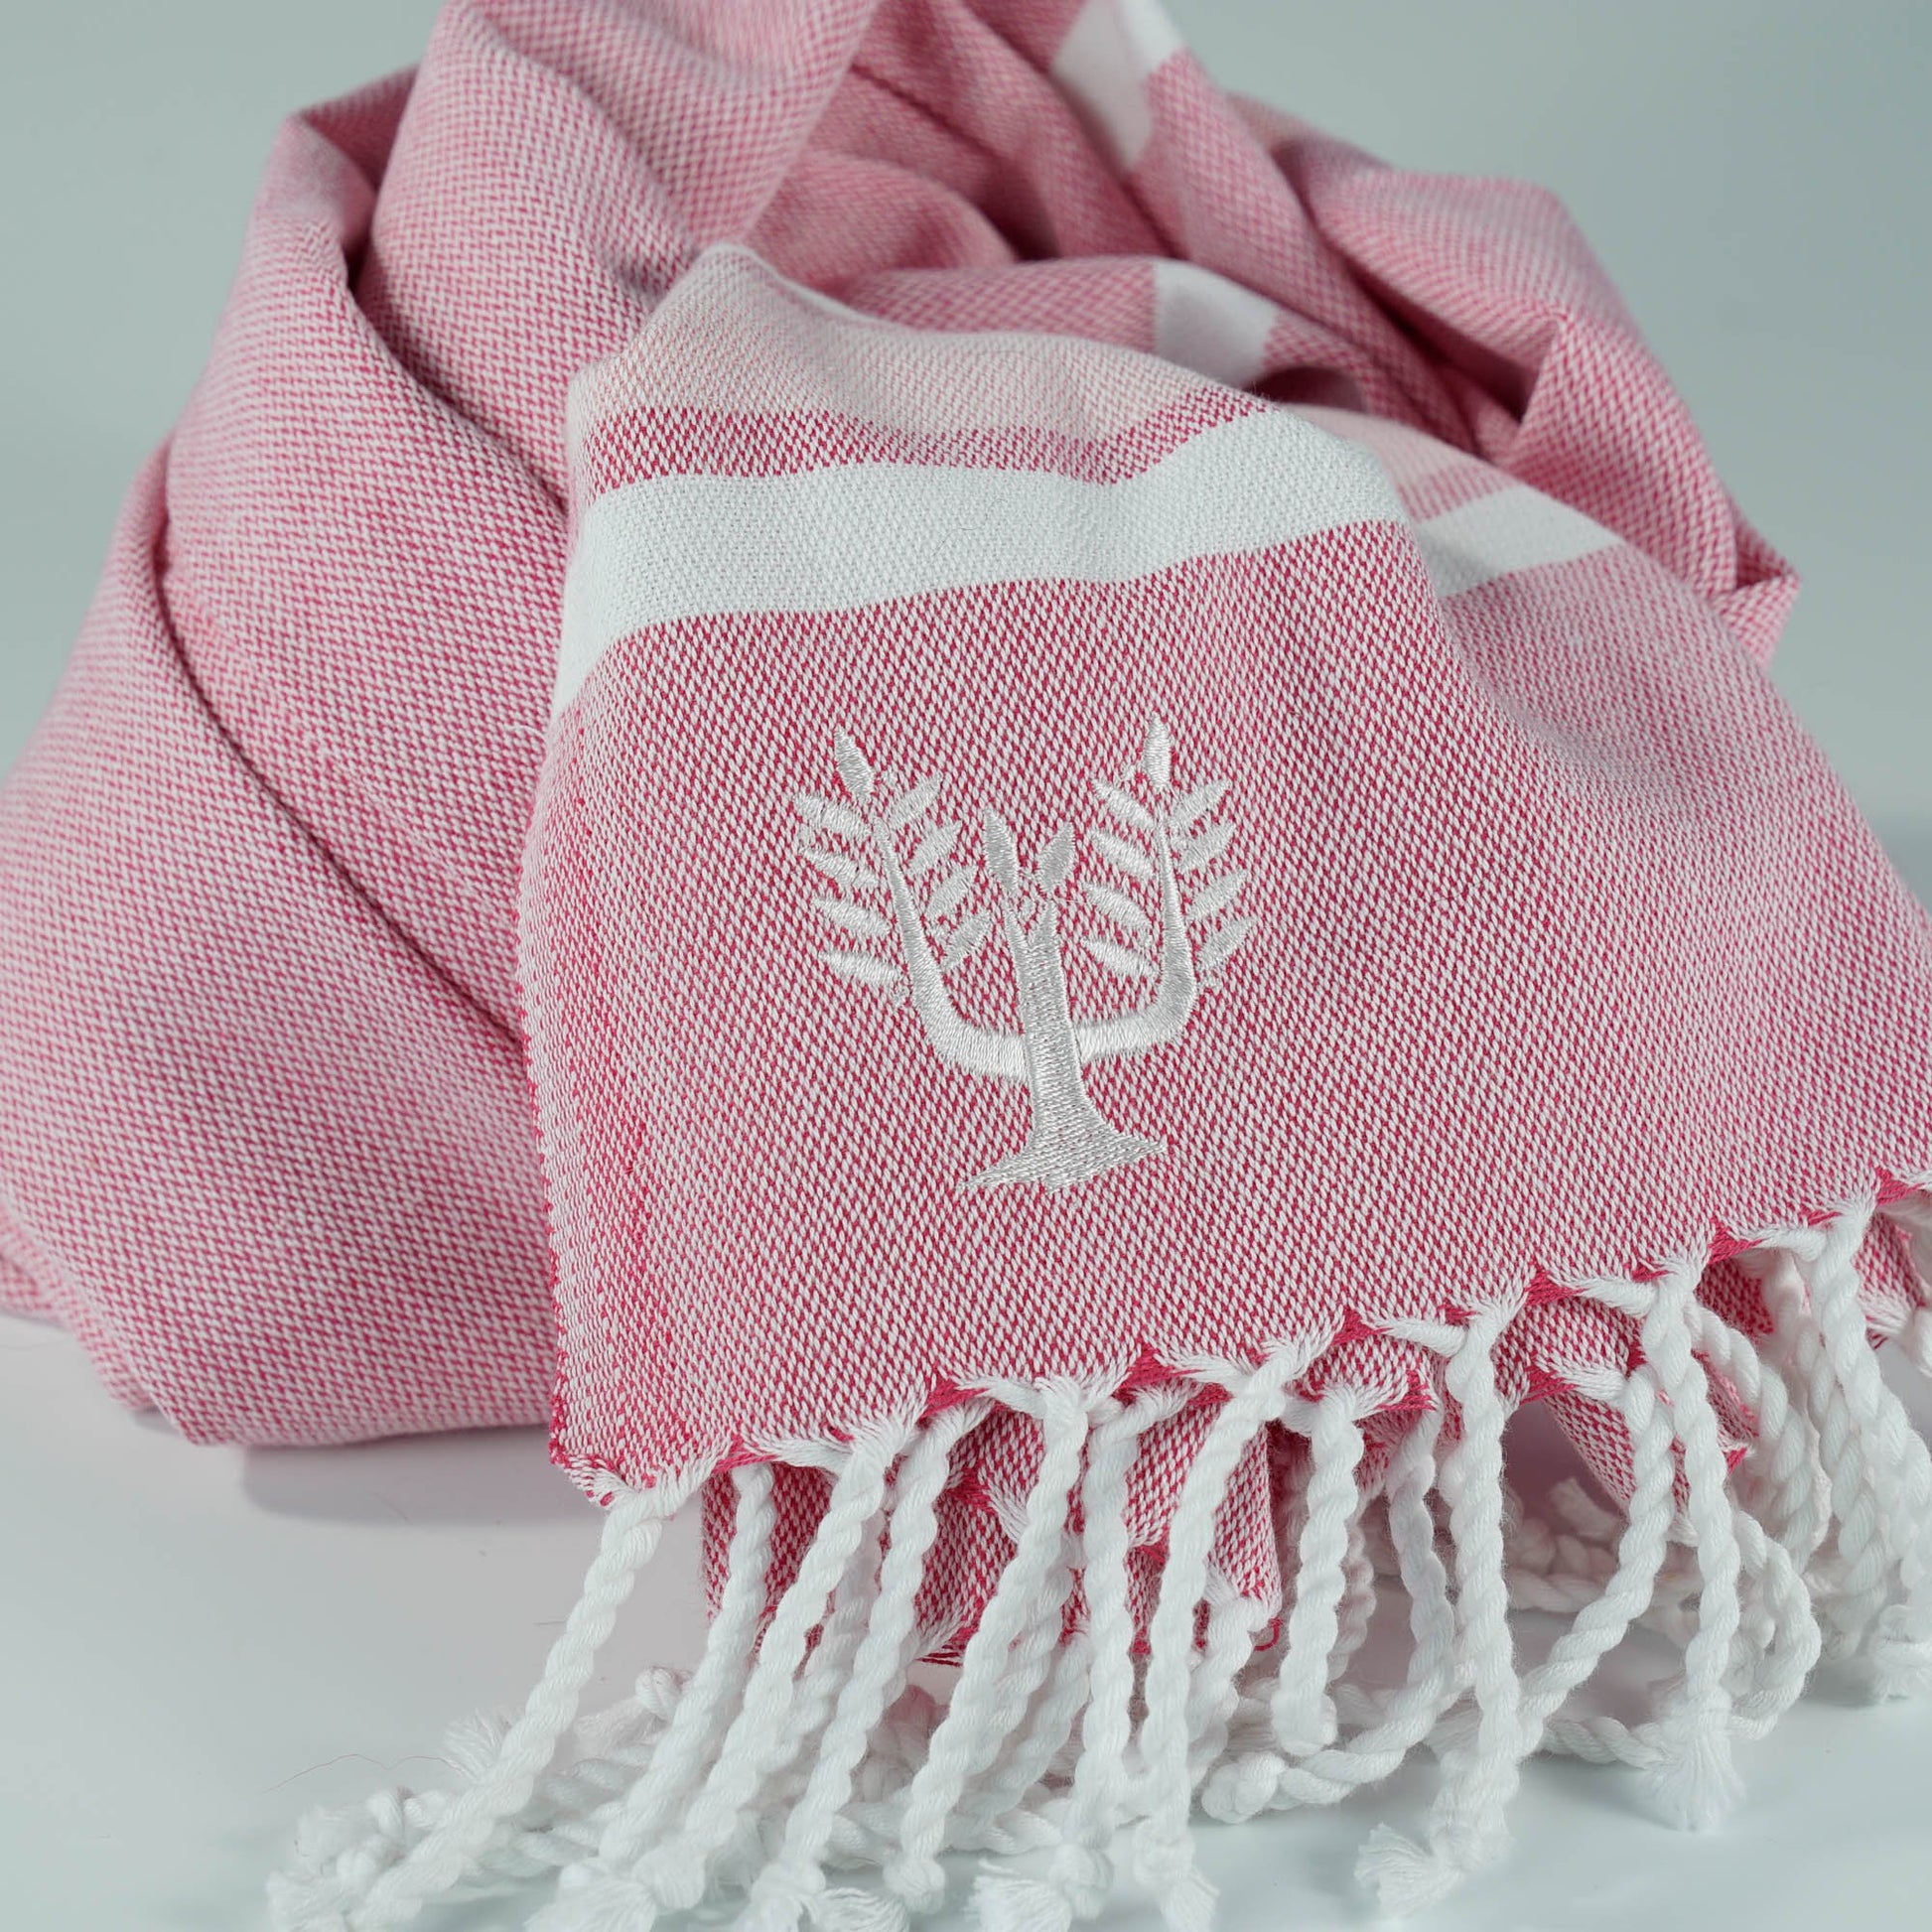 Hampton Hammam Towel | Pink-on-Pink | Wildash London - Wildash London